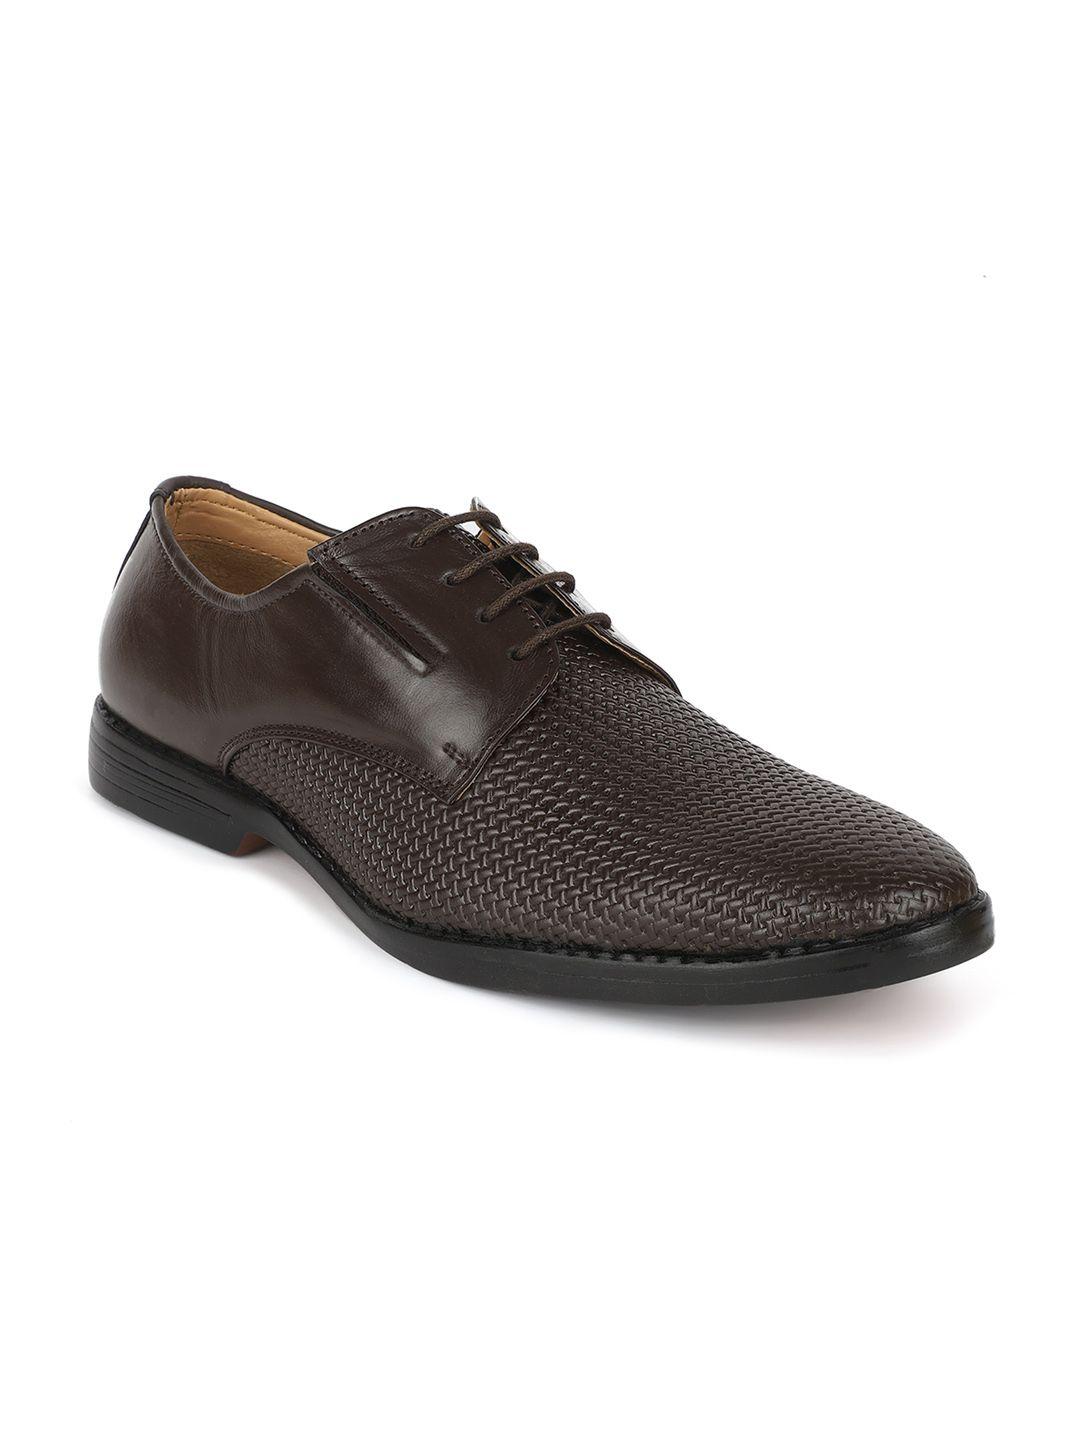 carlton-london-men-textured-leather-formal-derbys